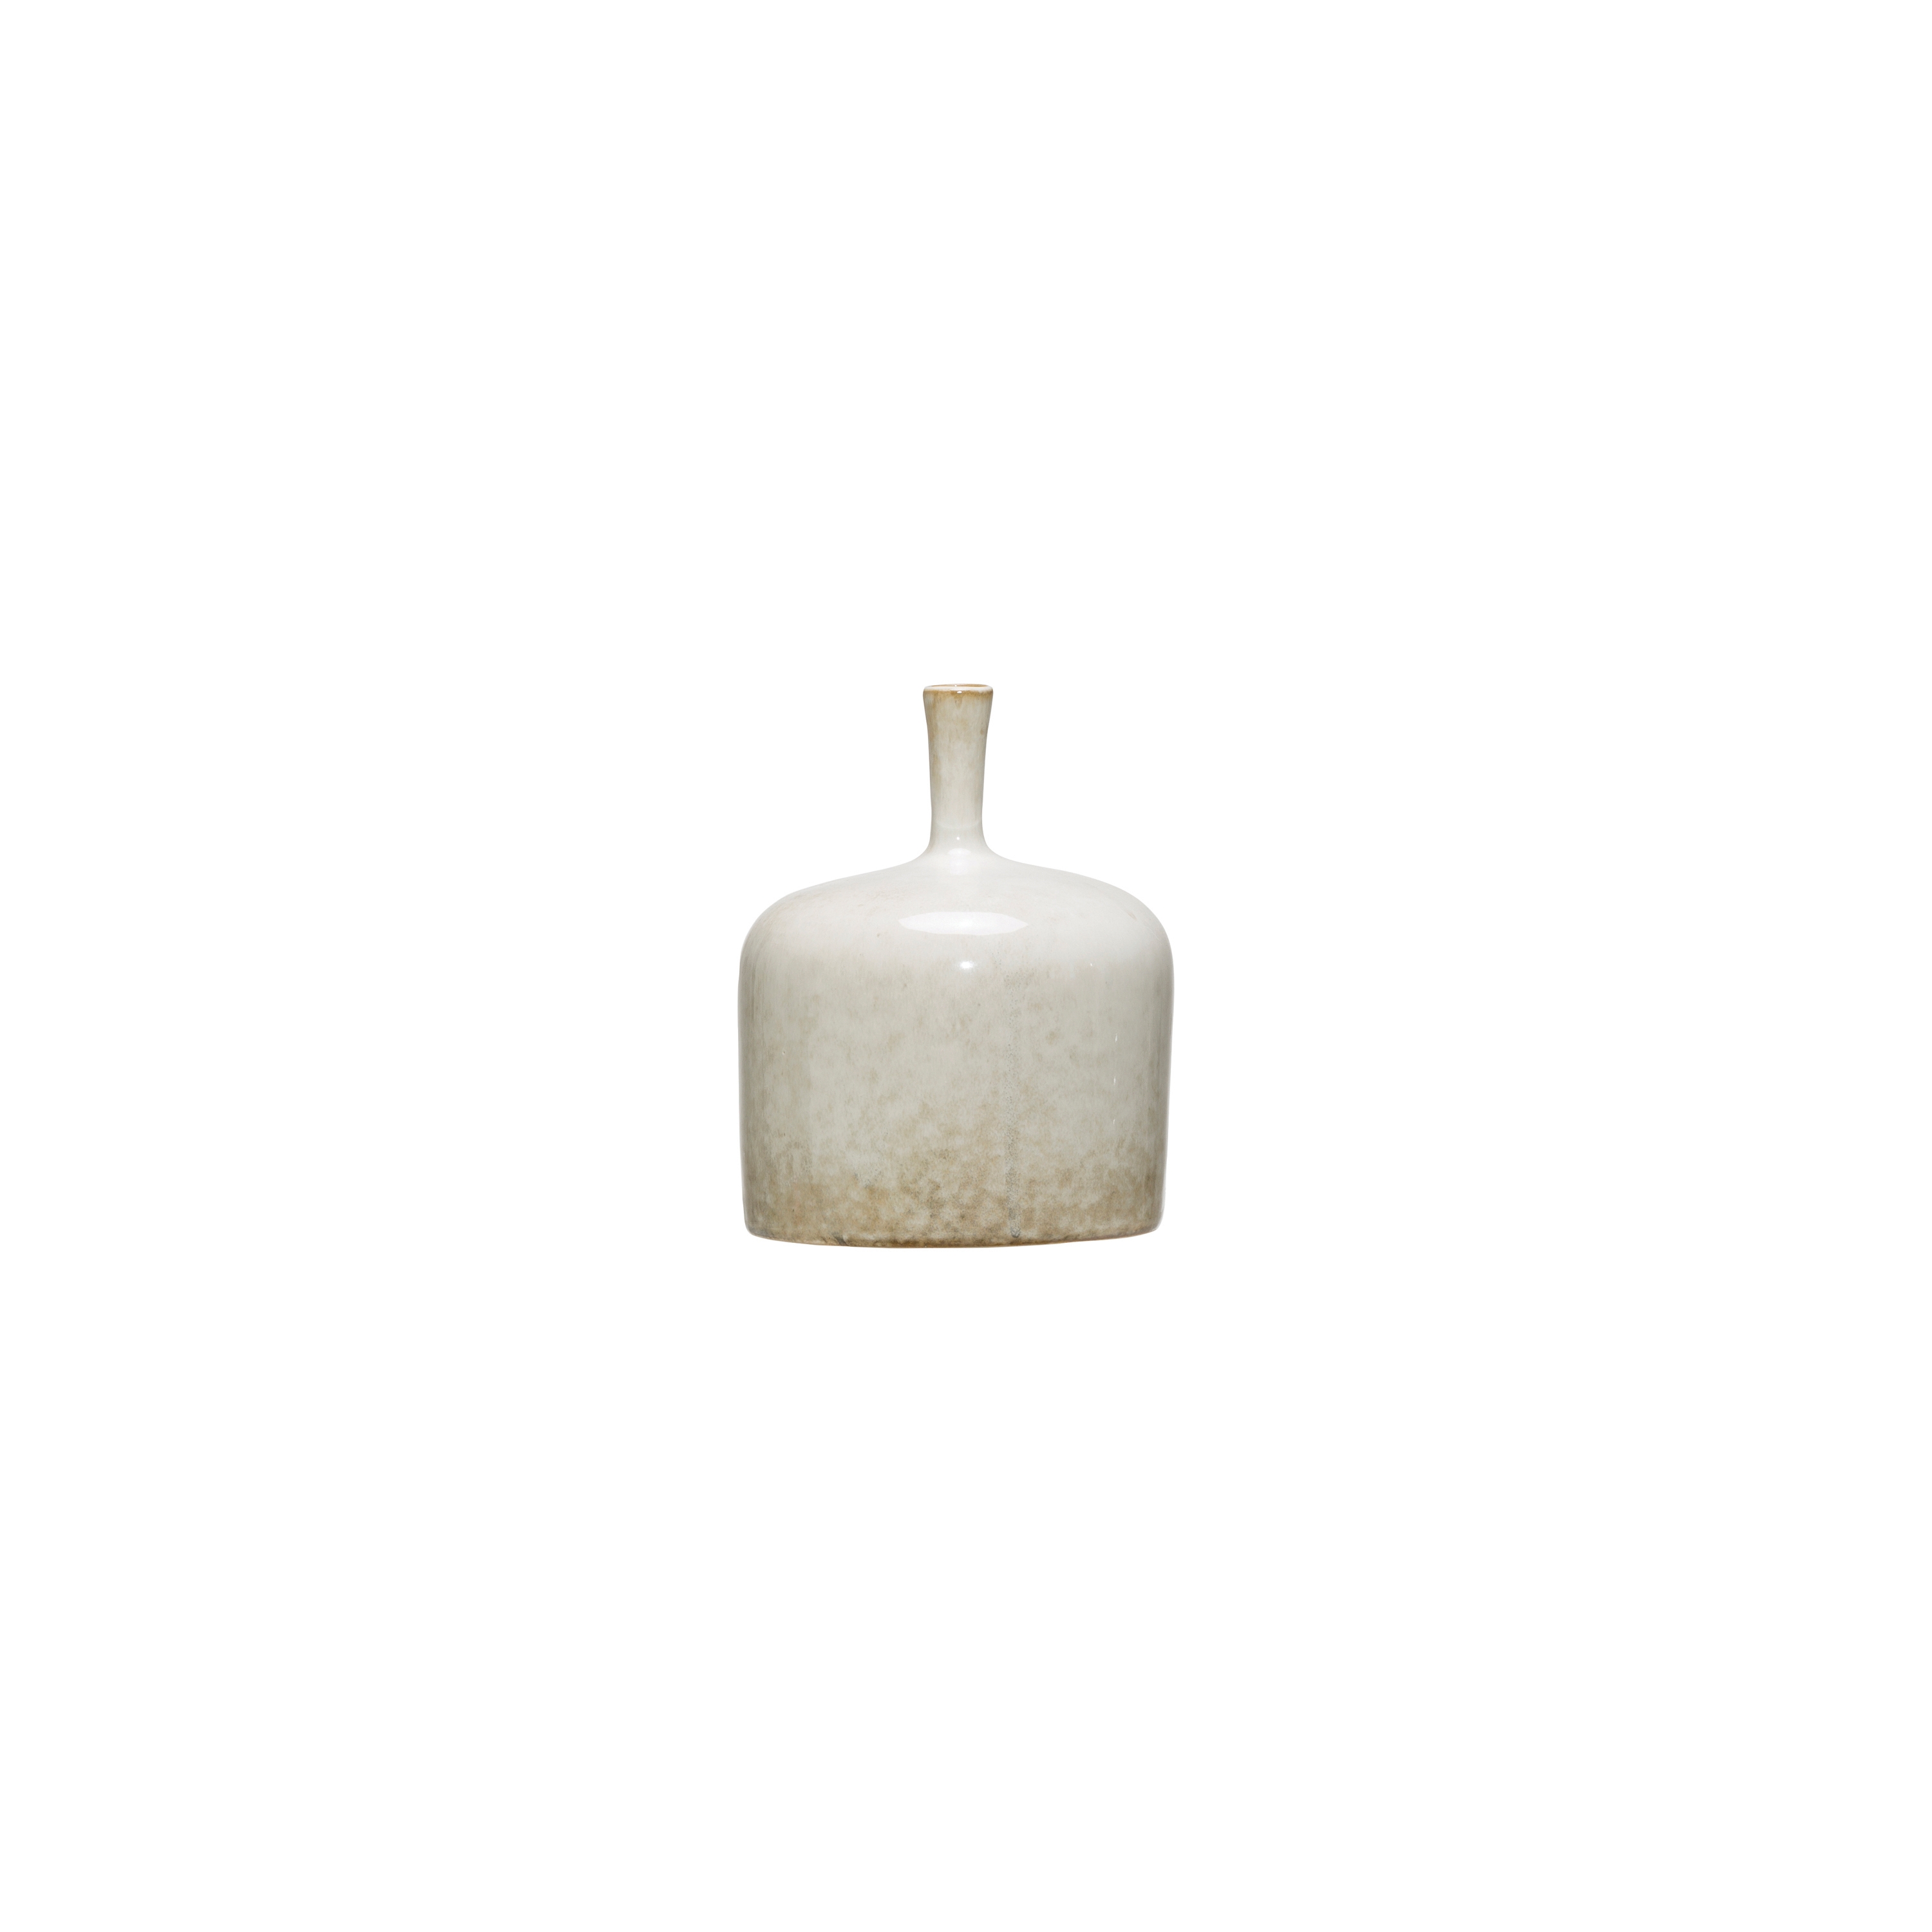 Small Cream Stoneware Vase with Reactive Glaze Finish (Each one will vary) - Image 0